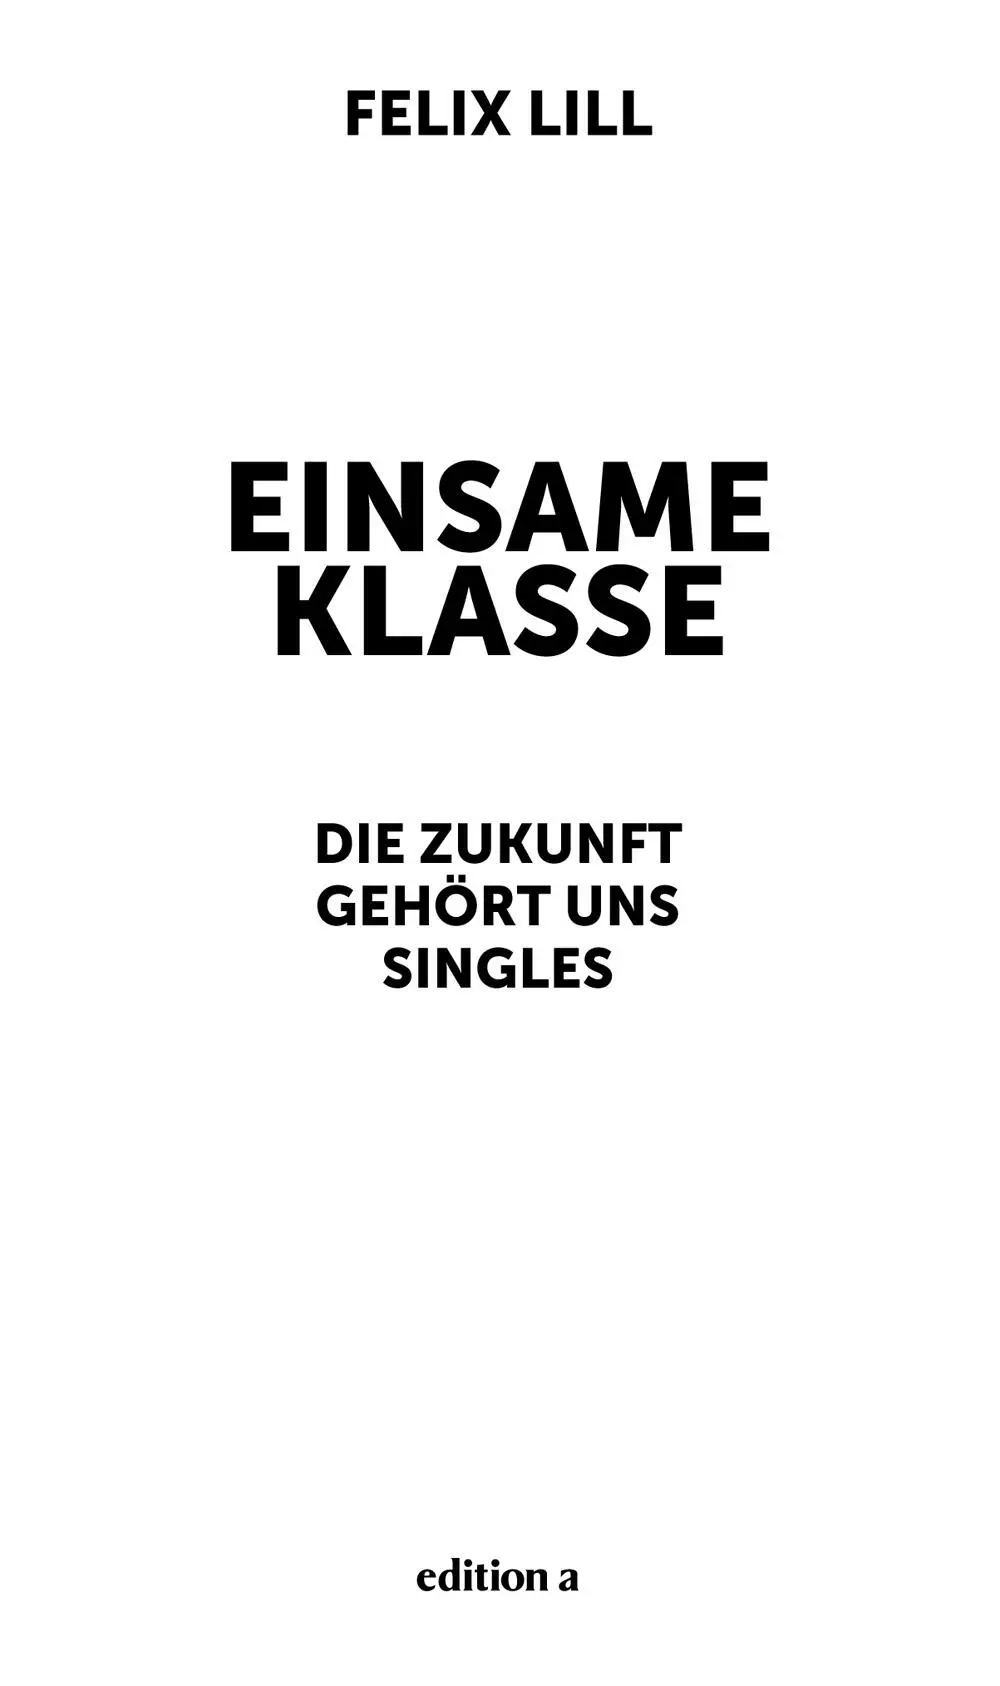 Felix Lill Einsame Klasse Alle Rechte vorbehalten 2017 edition a Wien - фото 1